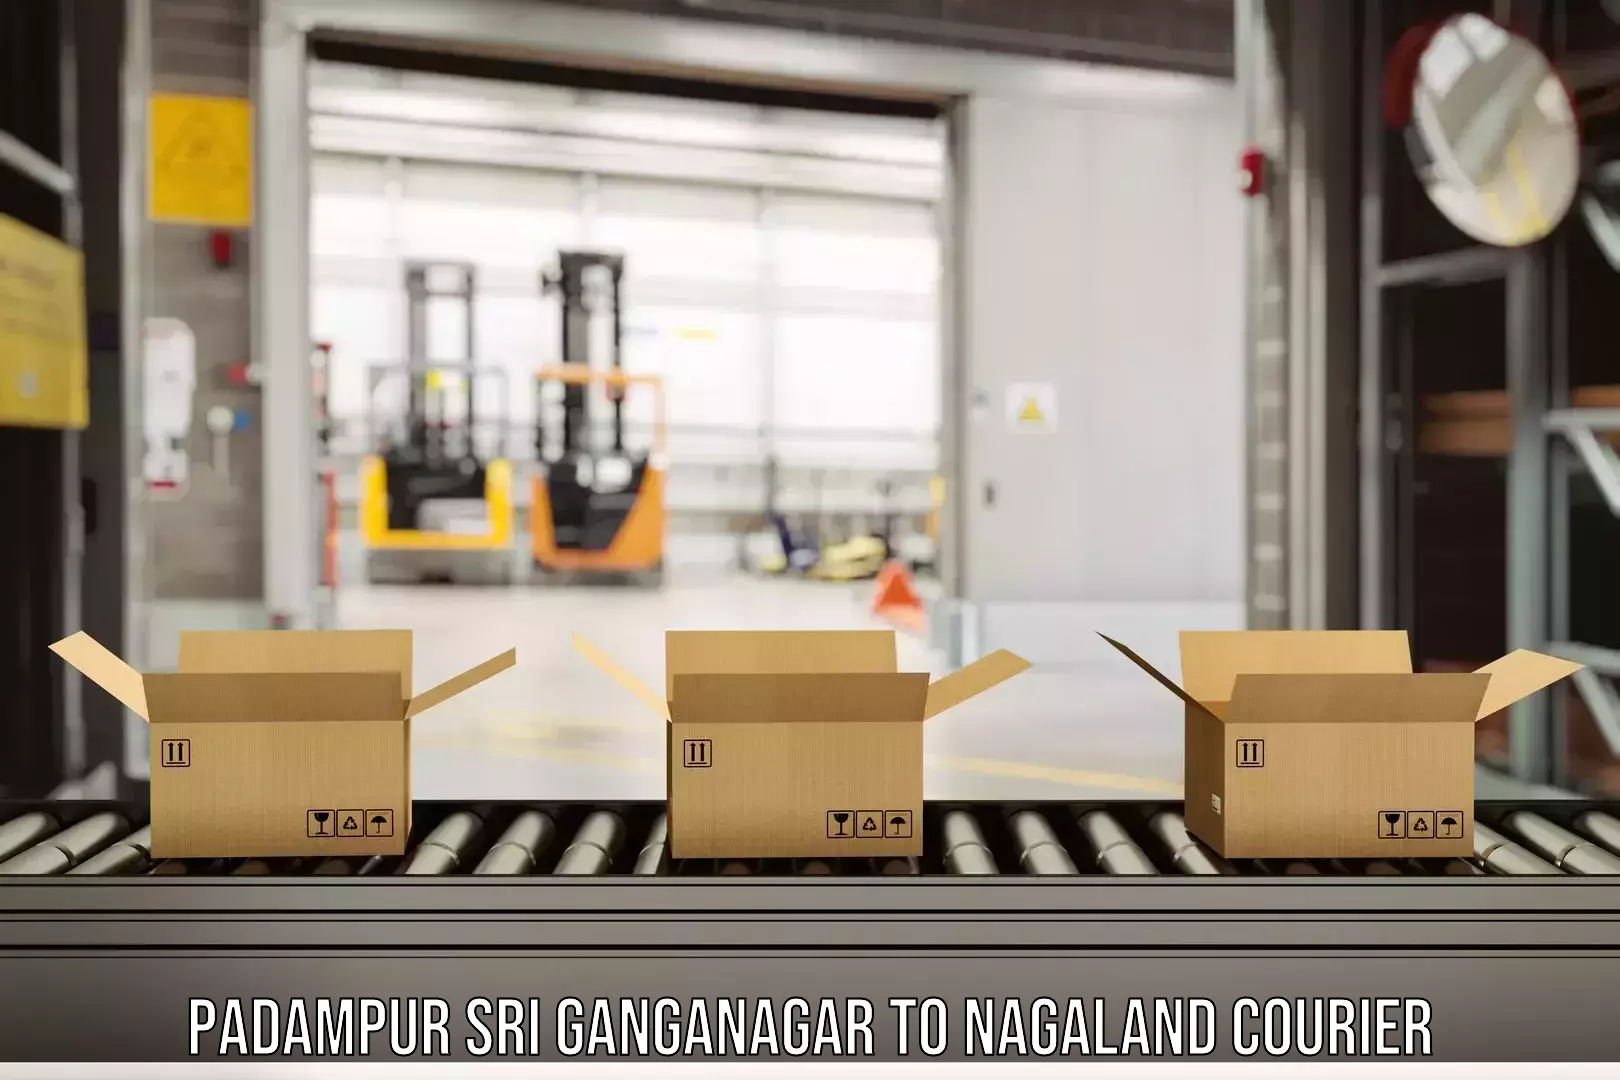 Local delivery service Padampur Sri Ganganagar to Dimapur